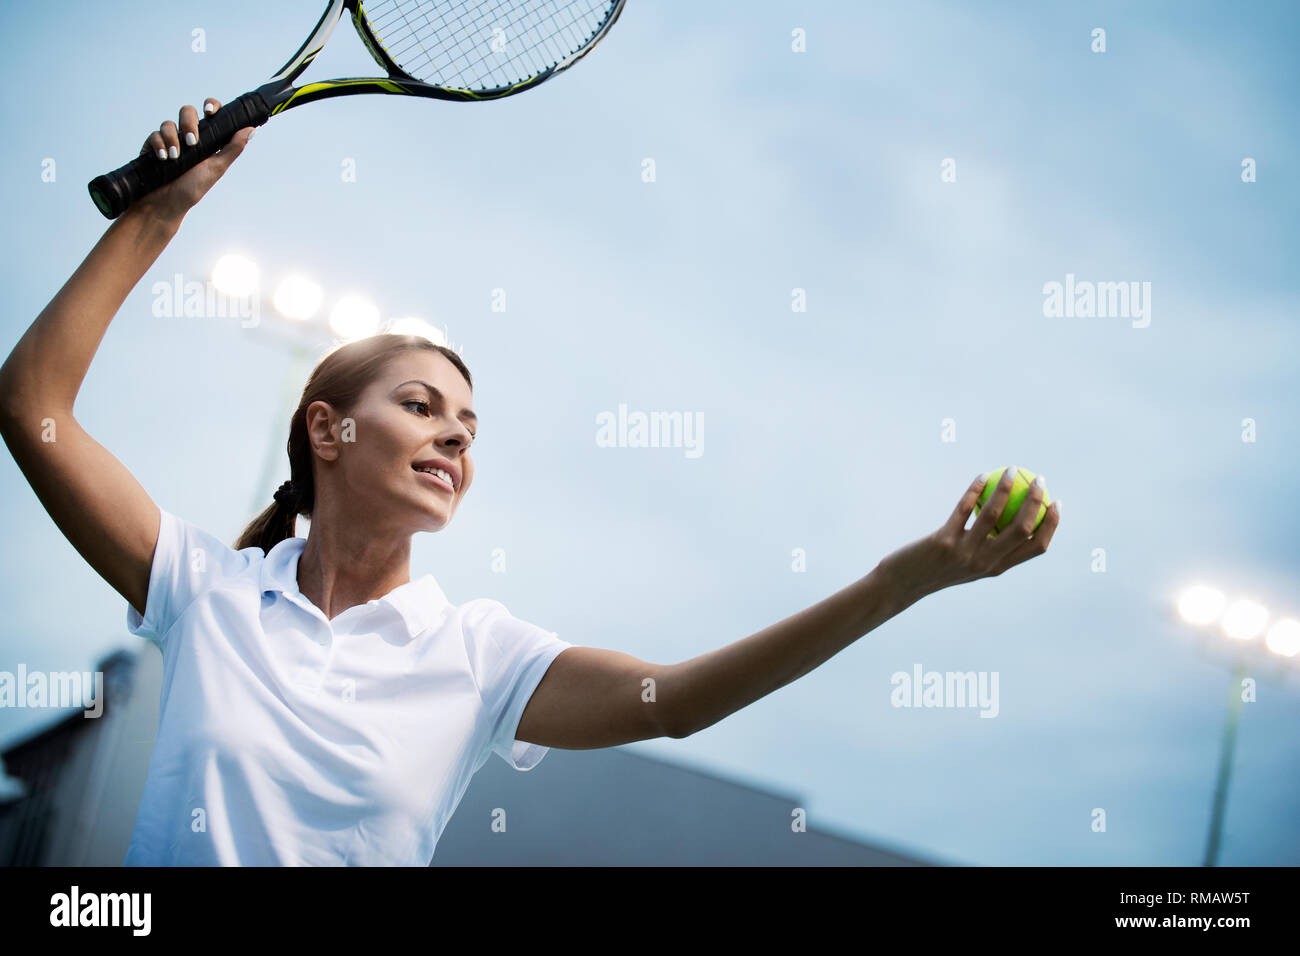 Felice montare ragazza giocando a tennis insieme. Sport concept Foto Stock